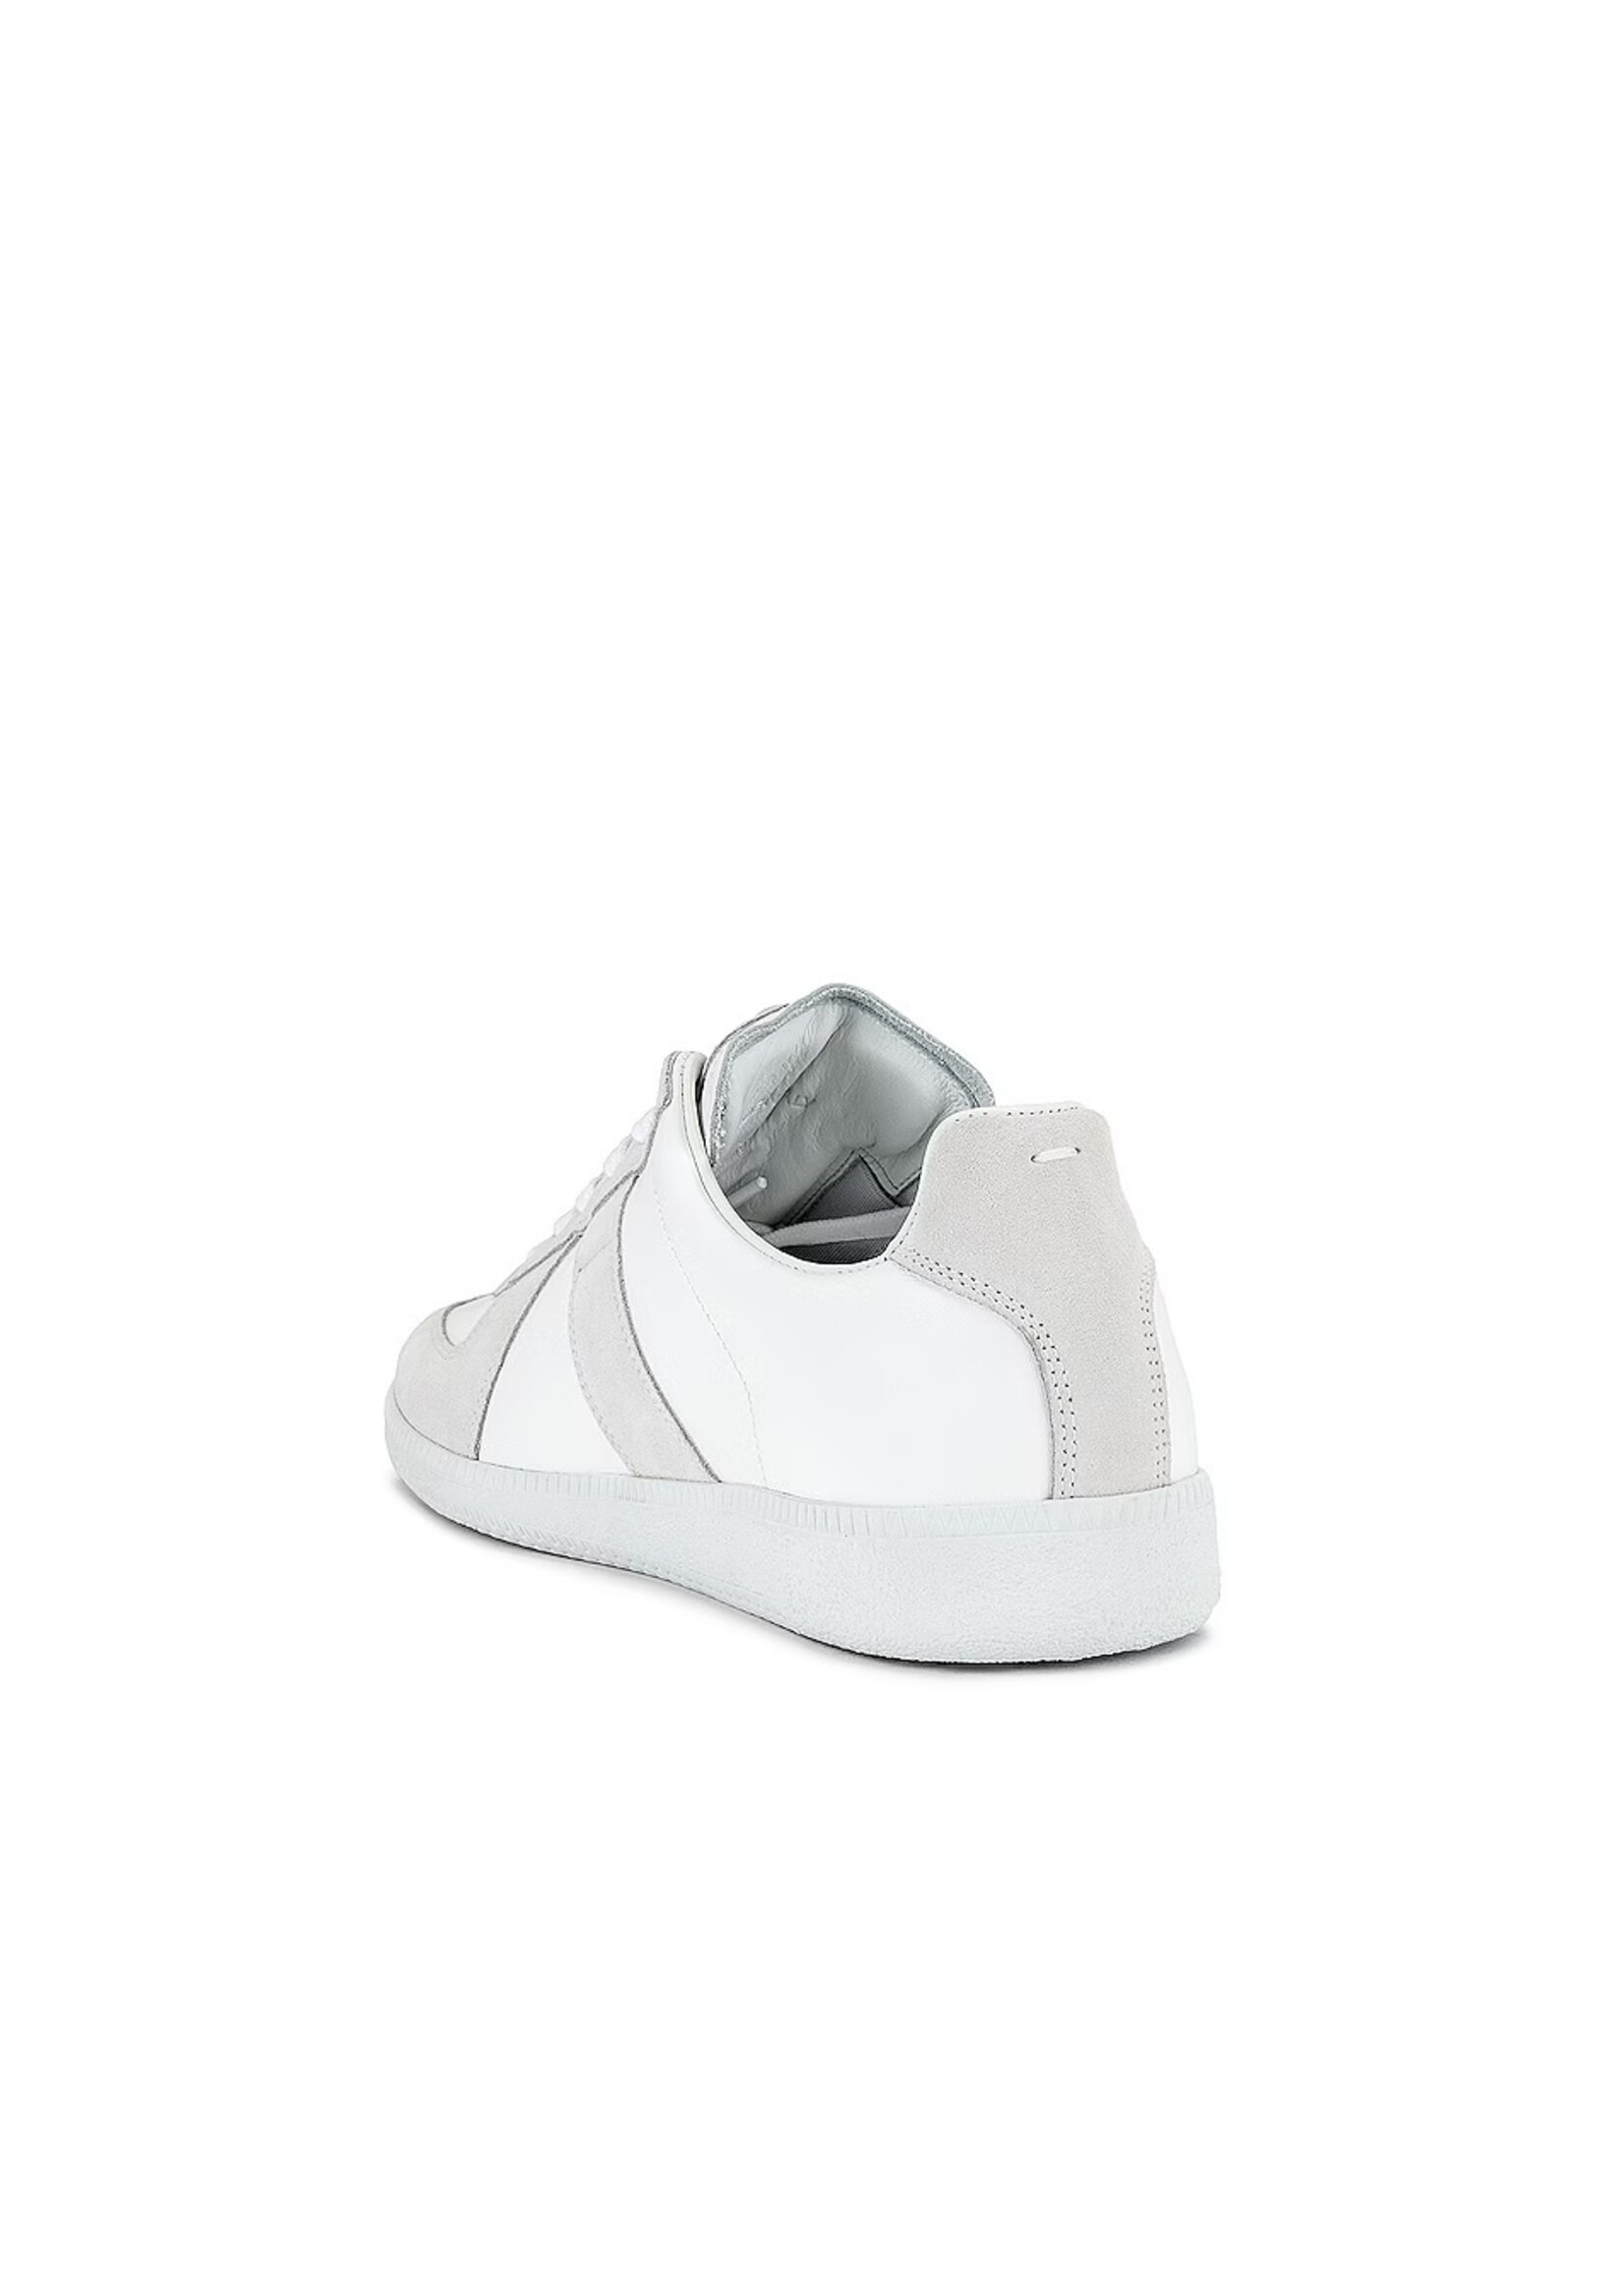 Maison Margiela Men's Replica Sneakers in  White